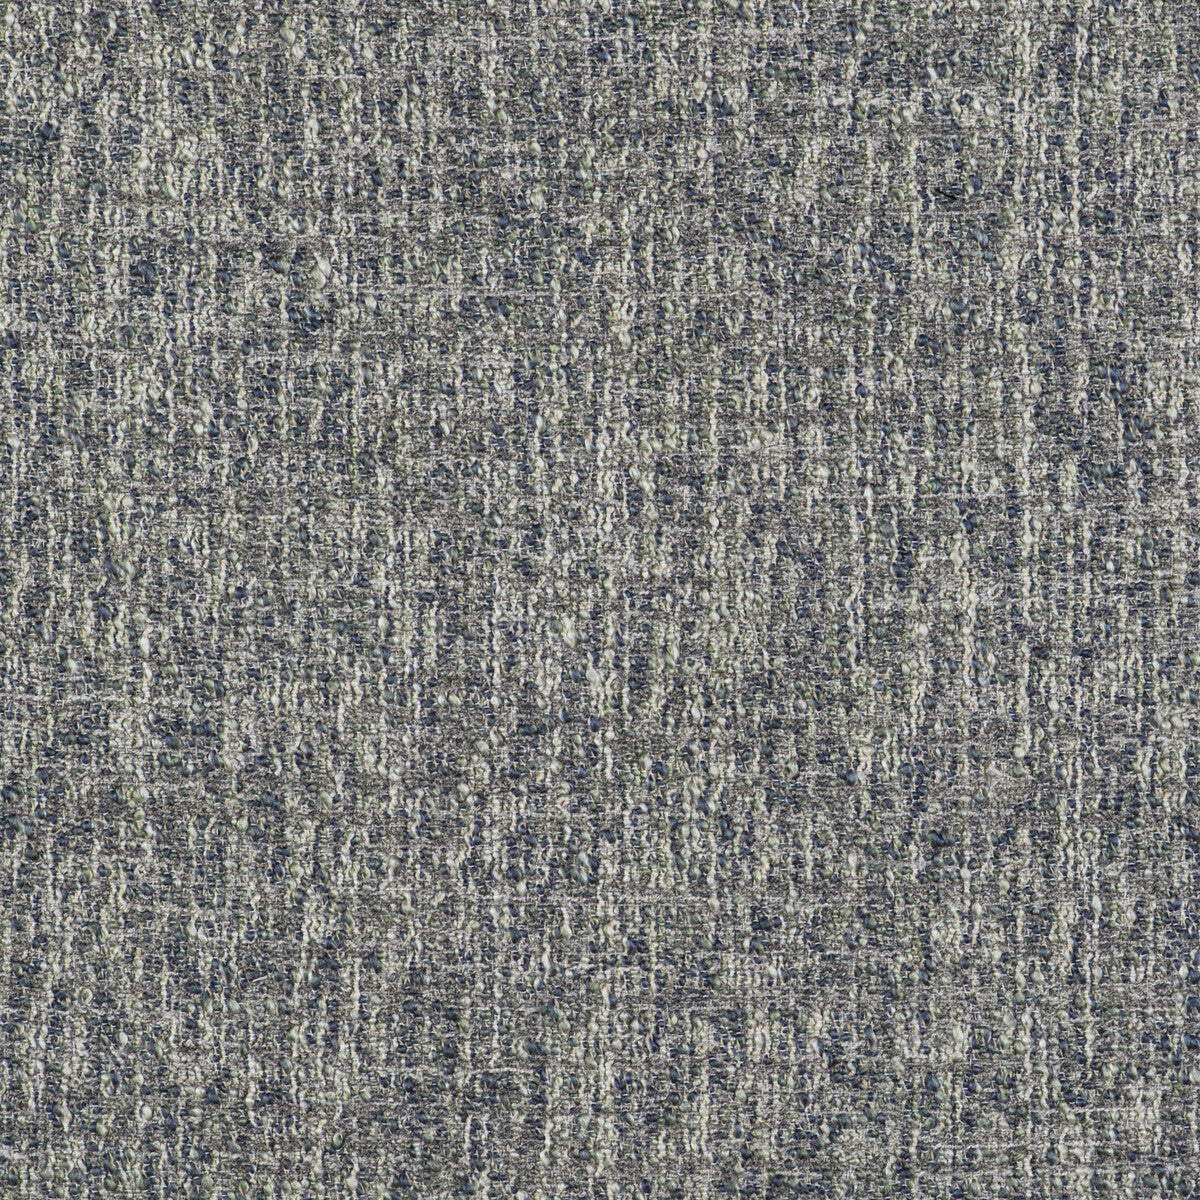 Telar fabric in azul claro color - pattern GDT5499.012.0 - by Gaston y Daniela in the Gaston Libreria collection